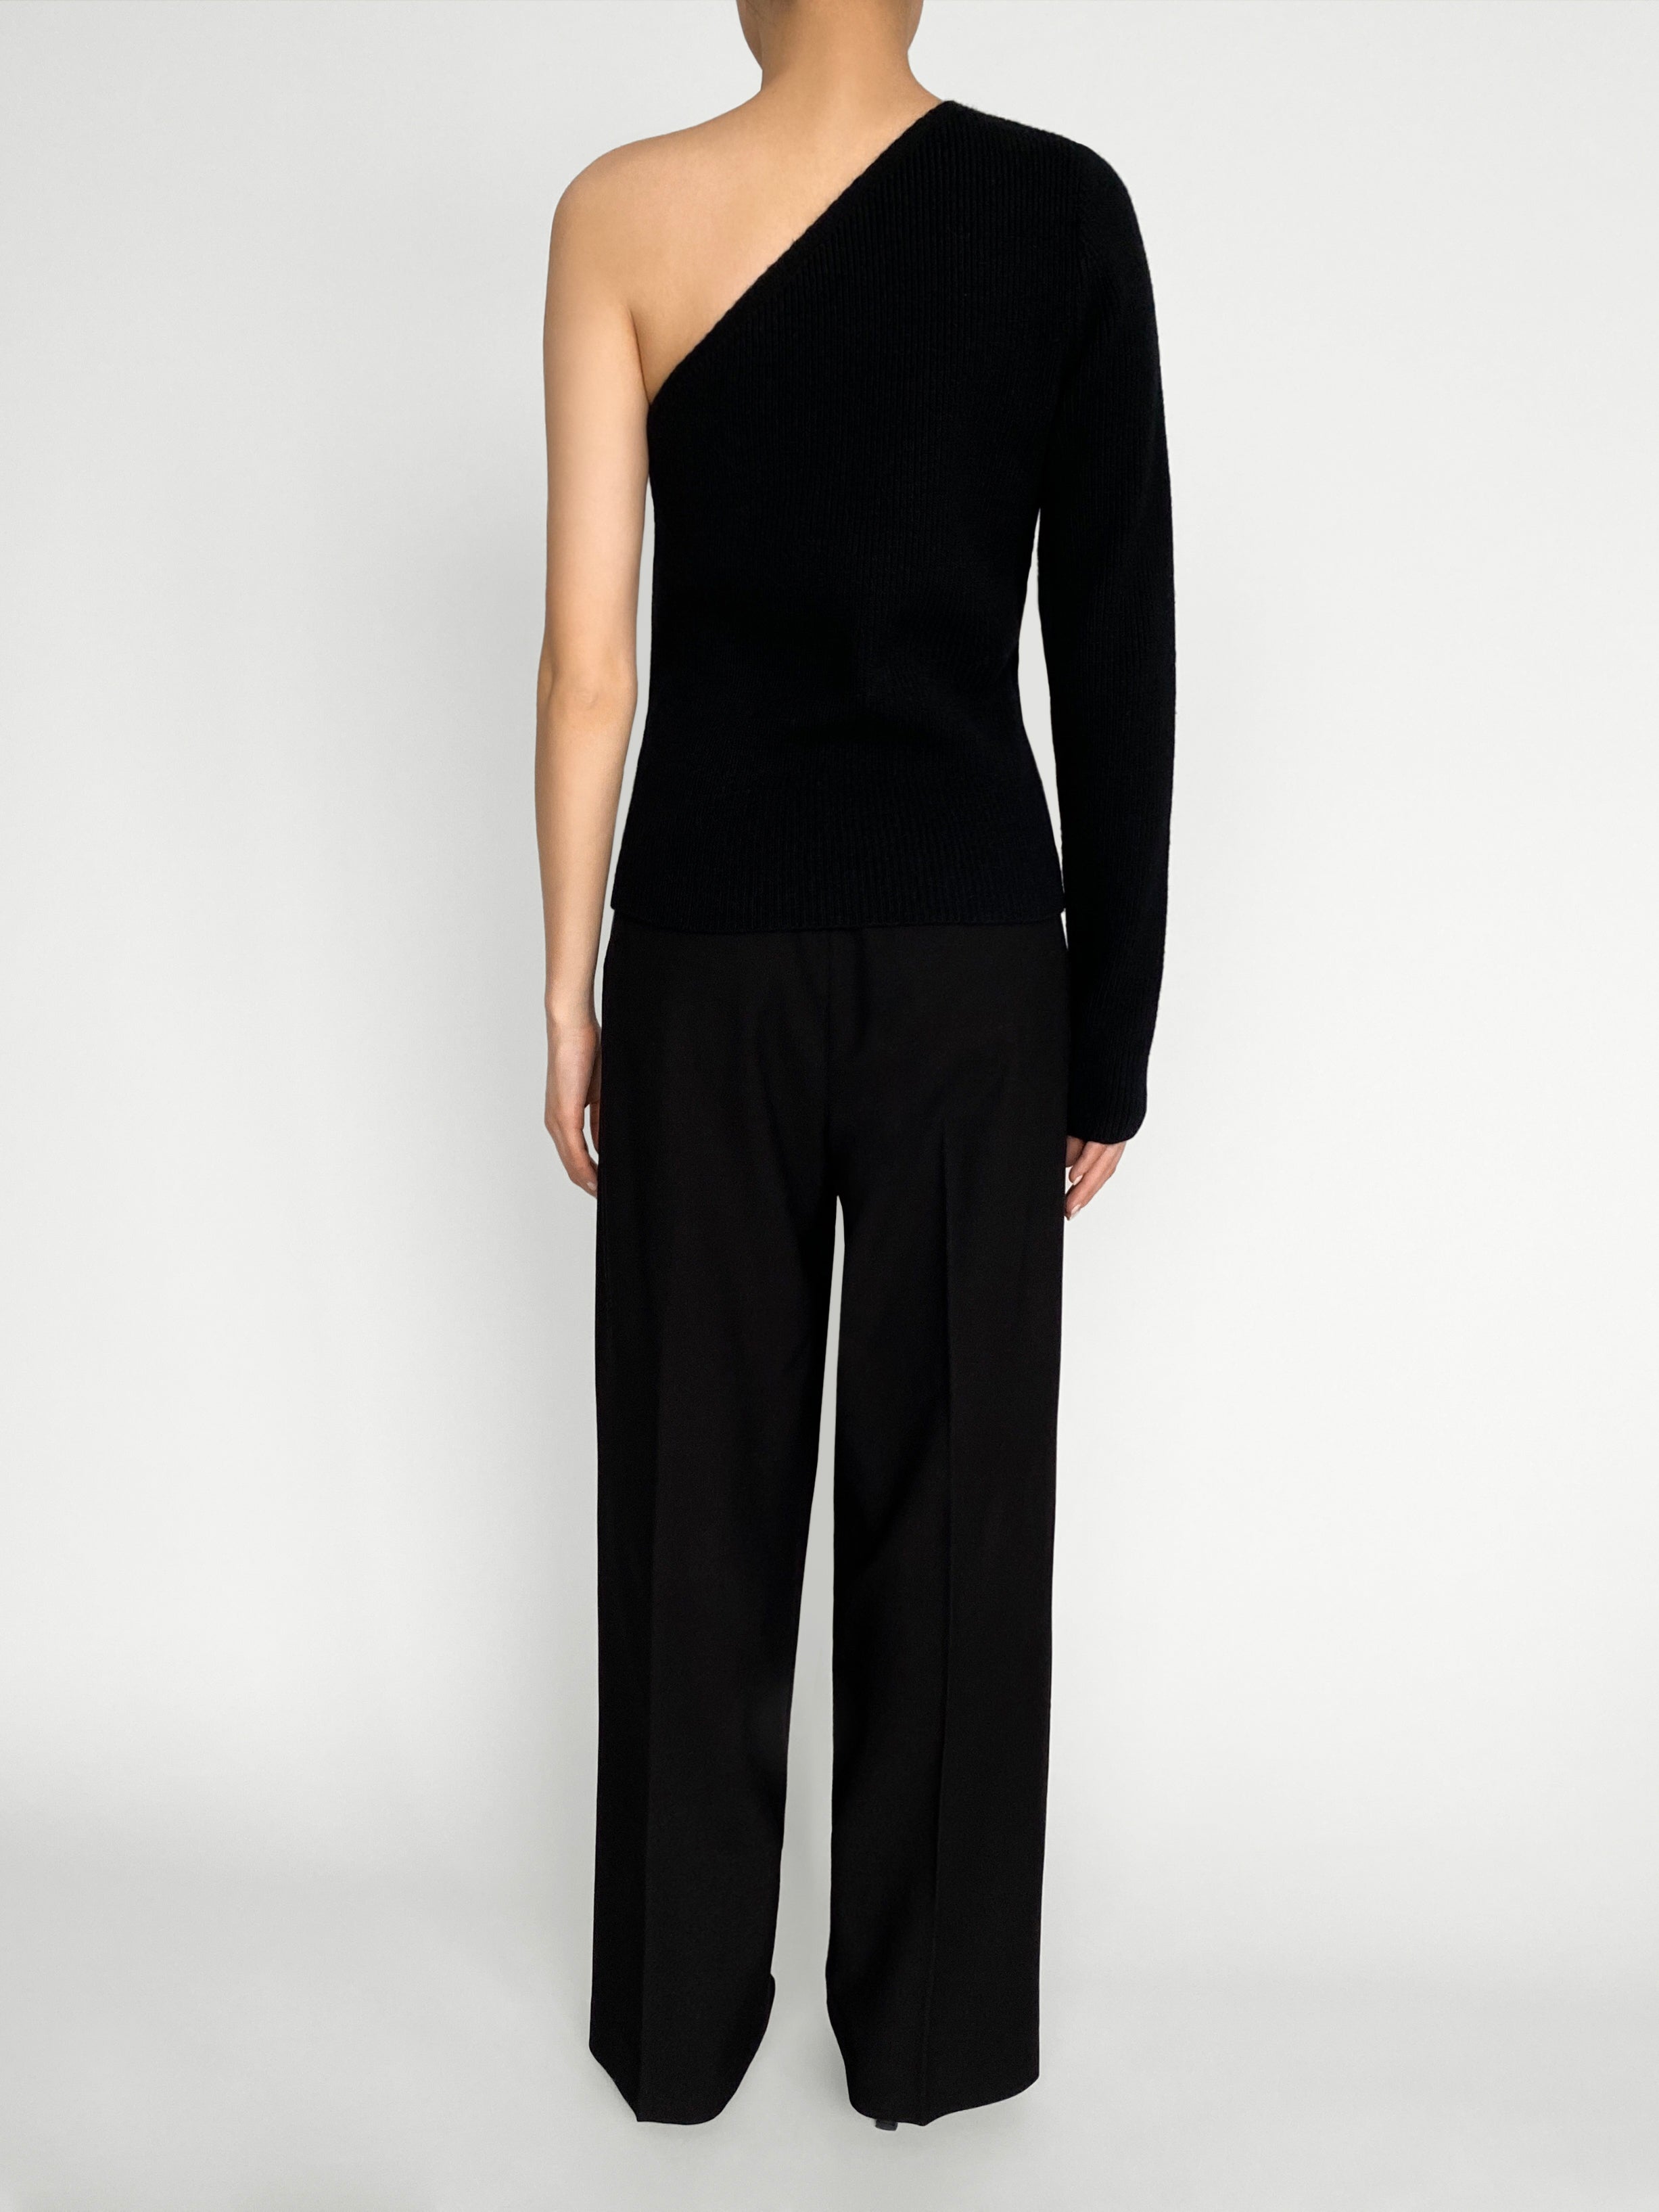 Naomi Wool Knit Top in Black